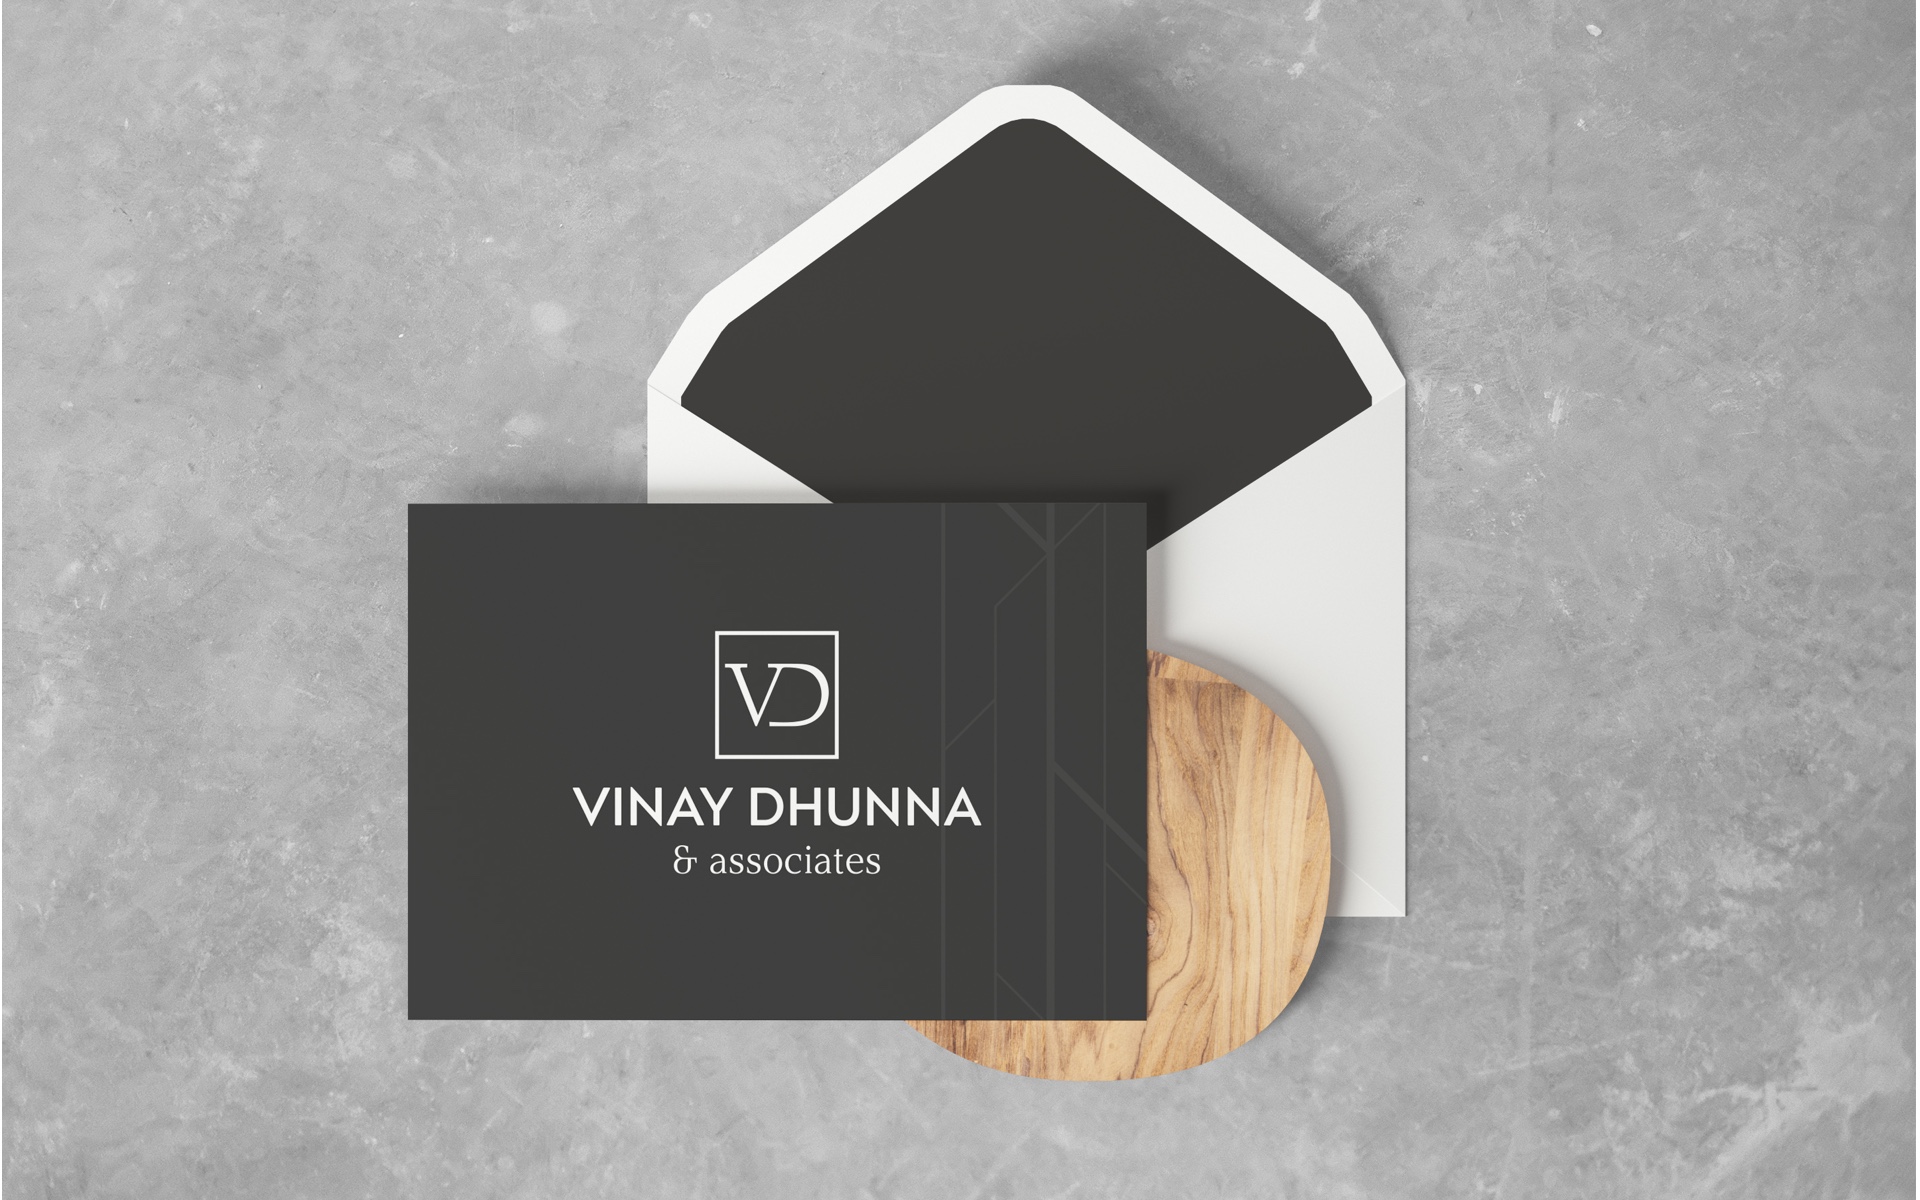 Vinay Dhunna's thank you card and envelope.